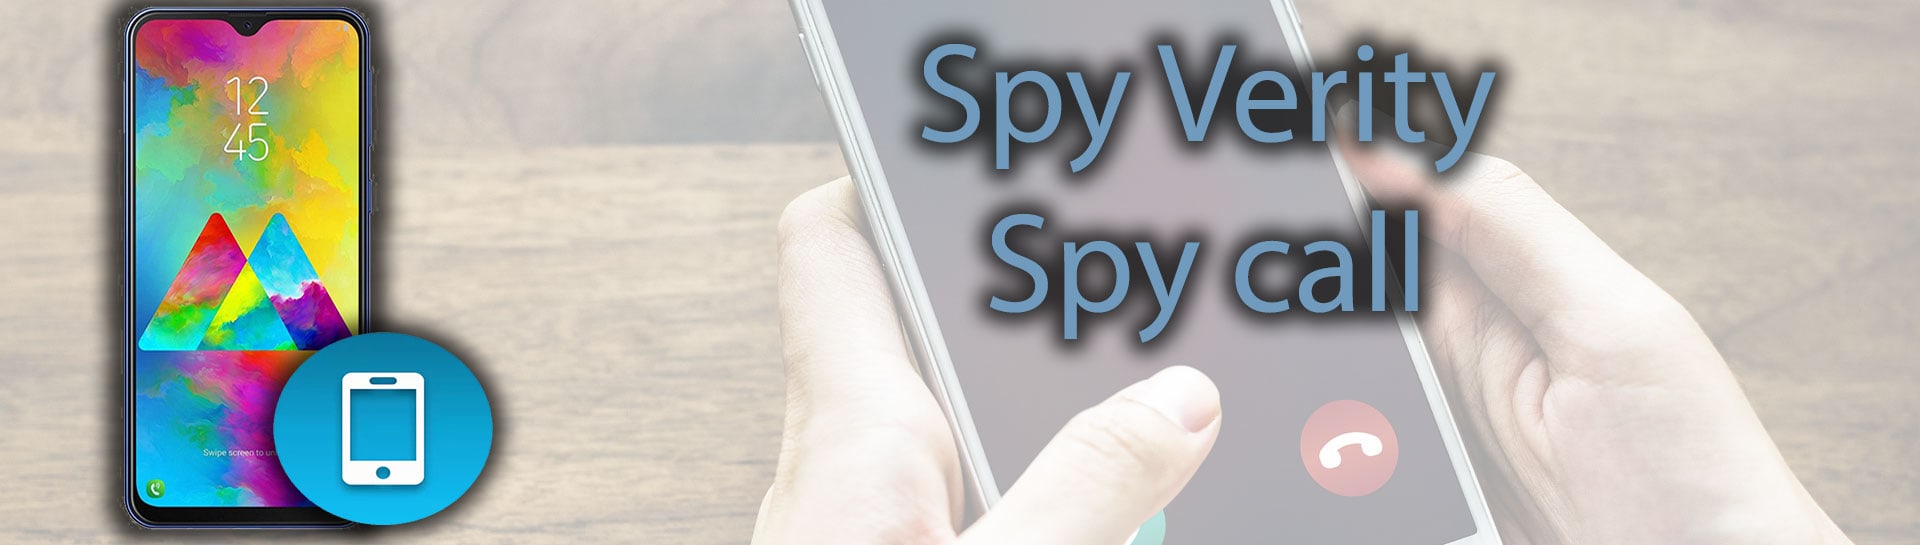 spy calls